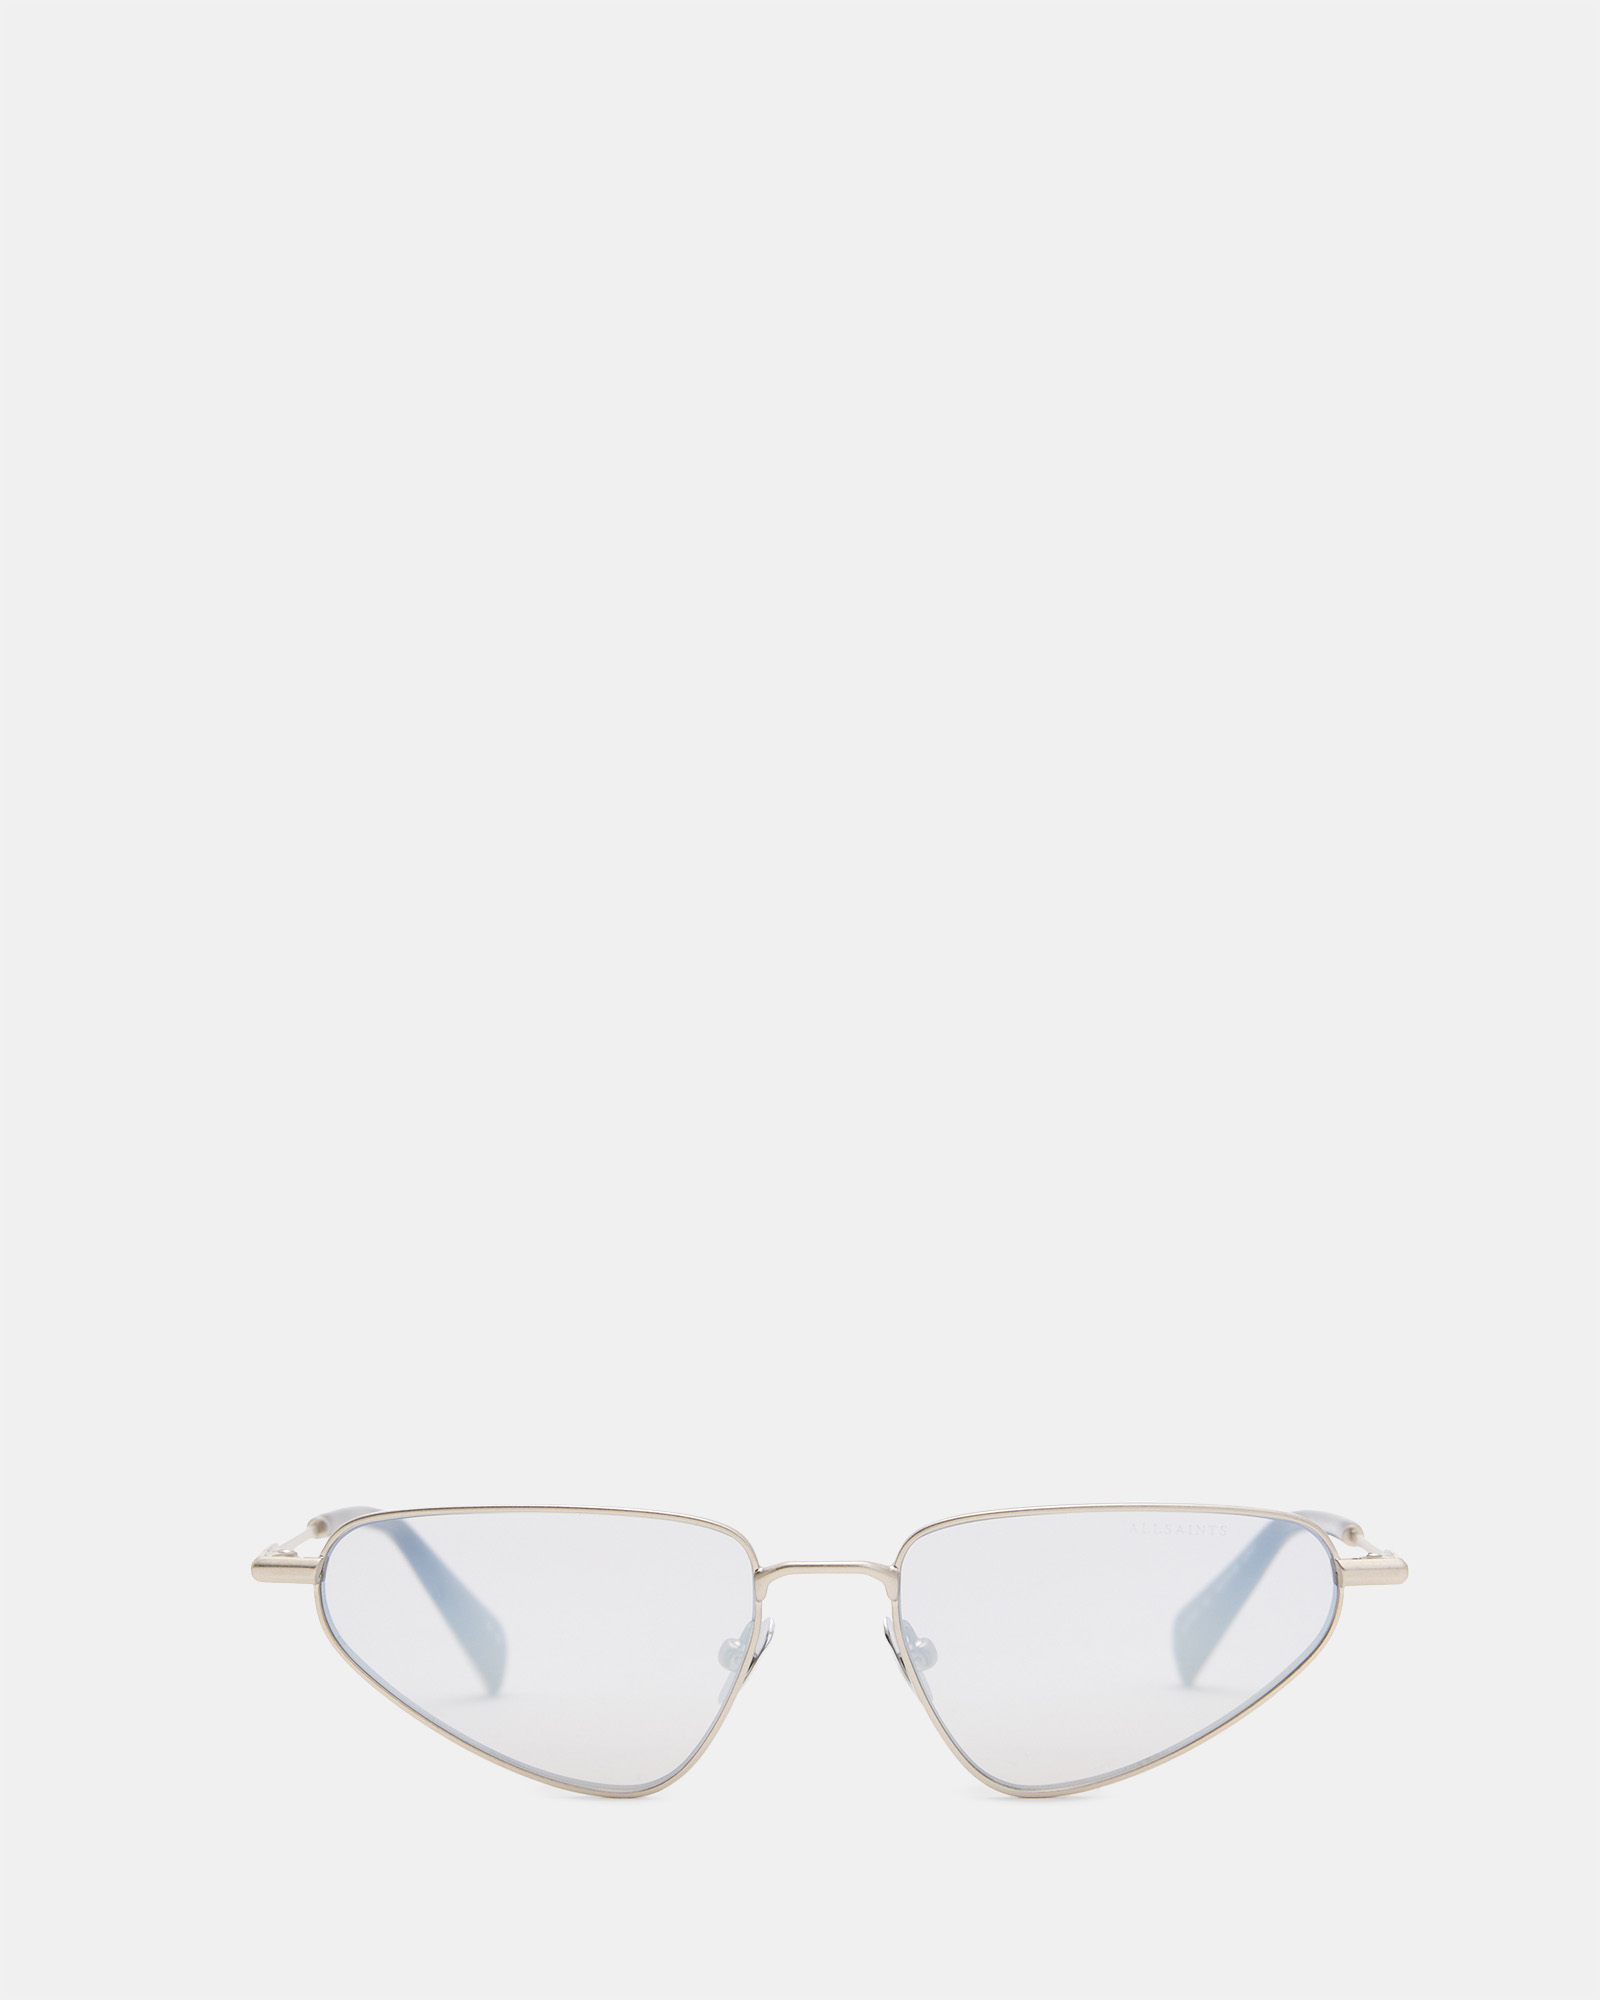 AllSaints Trinity Cat Eye Sunglasses,, Silver/Black